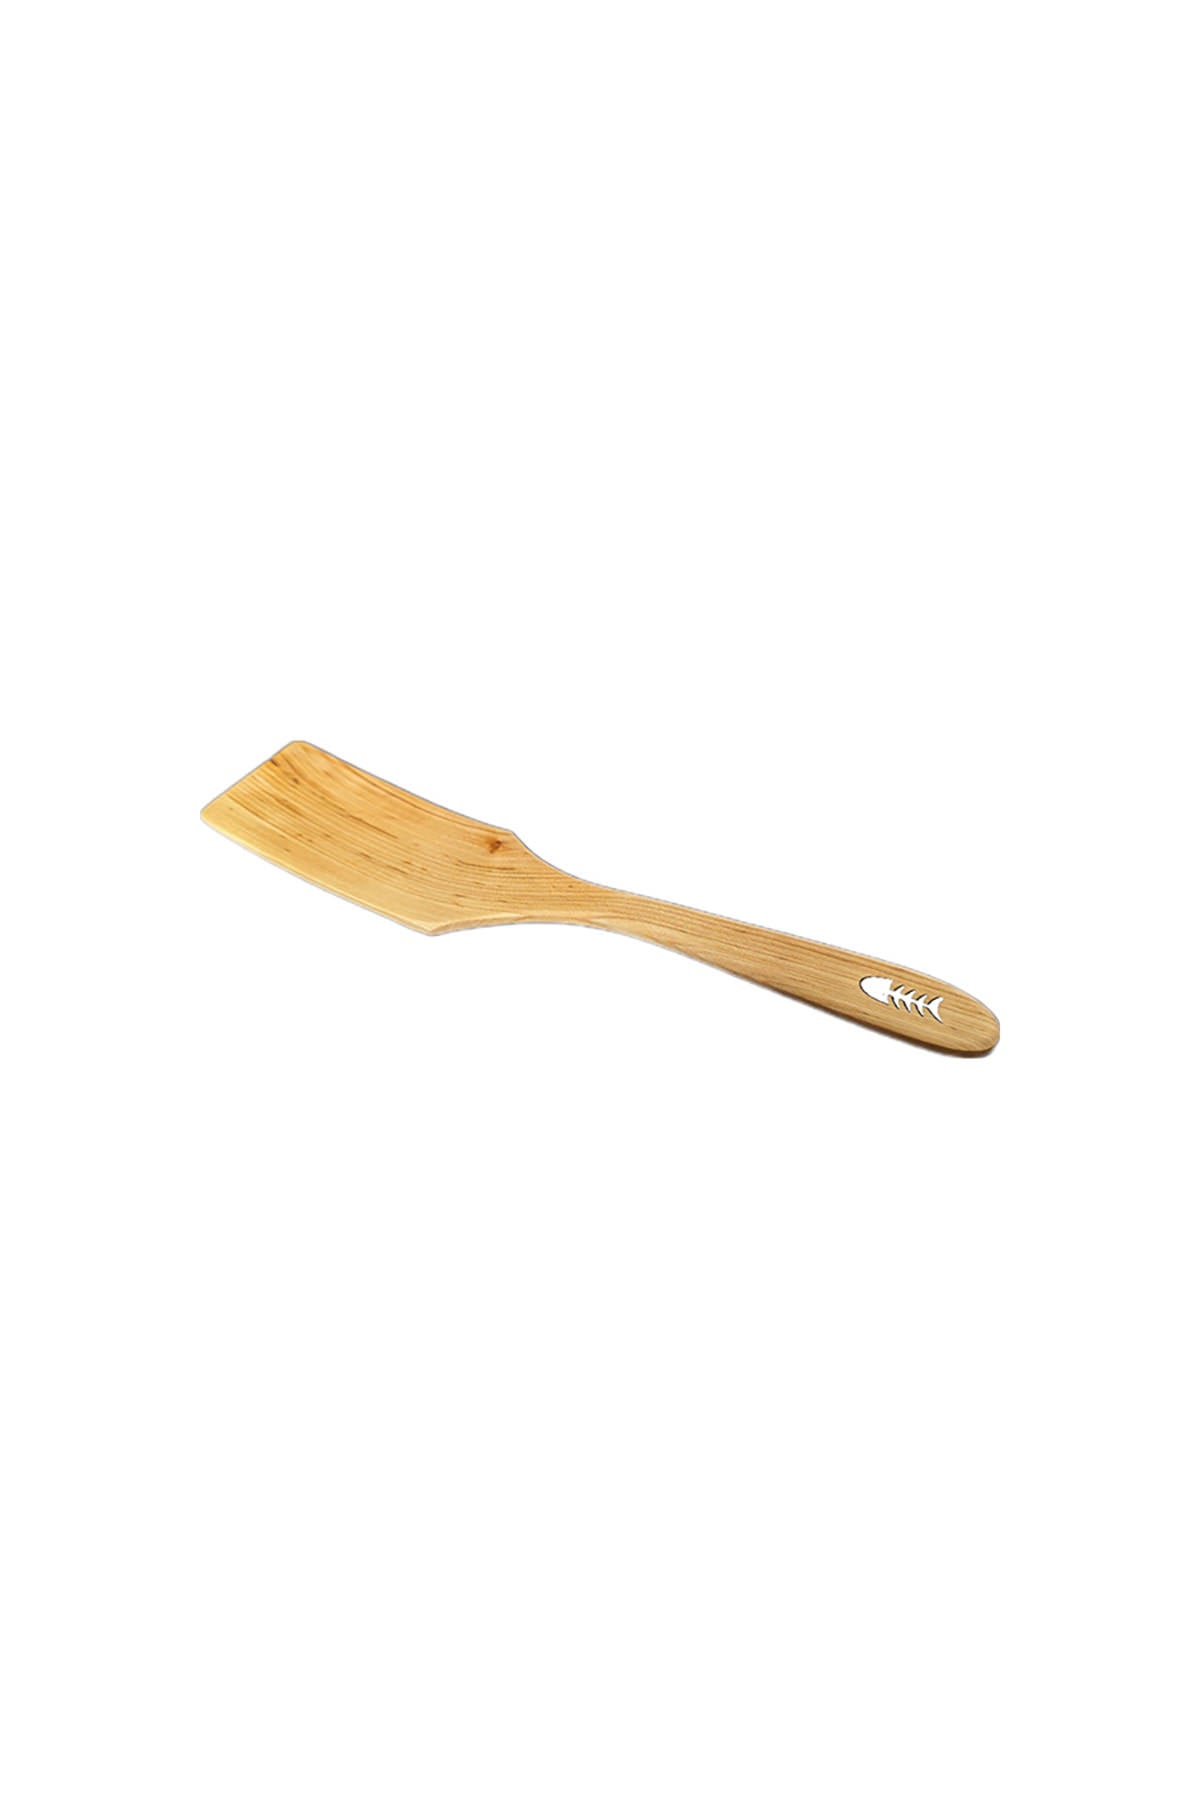 Alder wood spatula | 27 x 5.5 cm, curved | Various designs